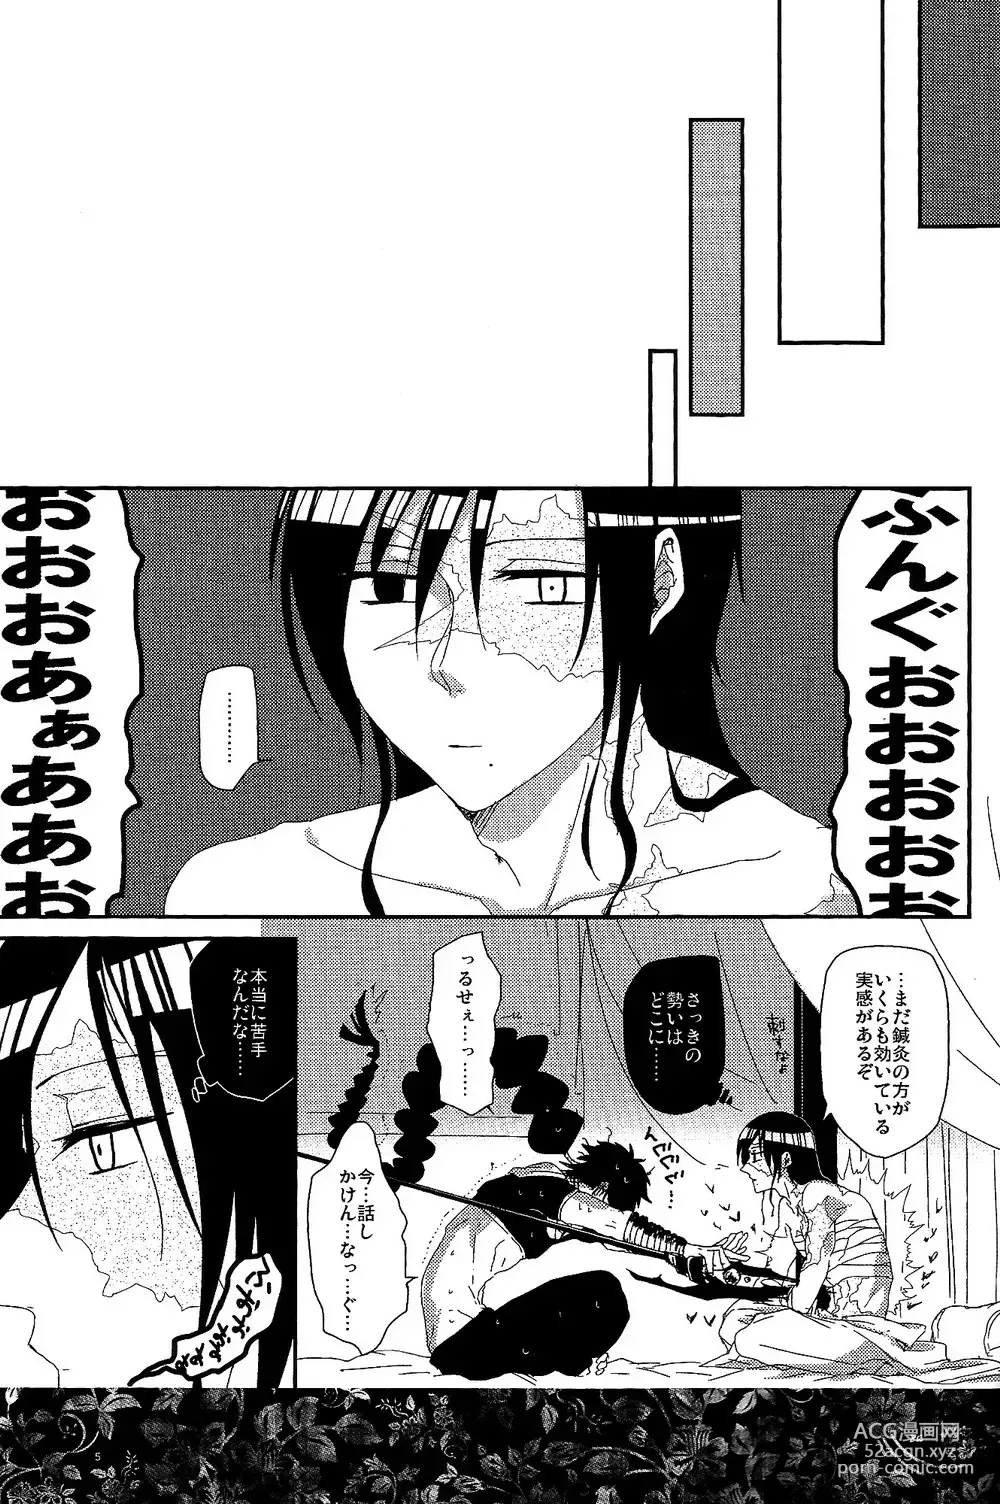 Page 4 of doujinshi GOLDEN ERROR